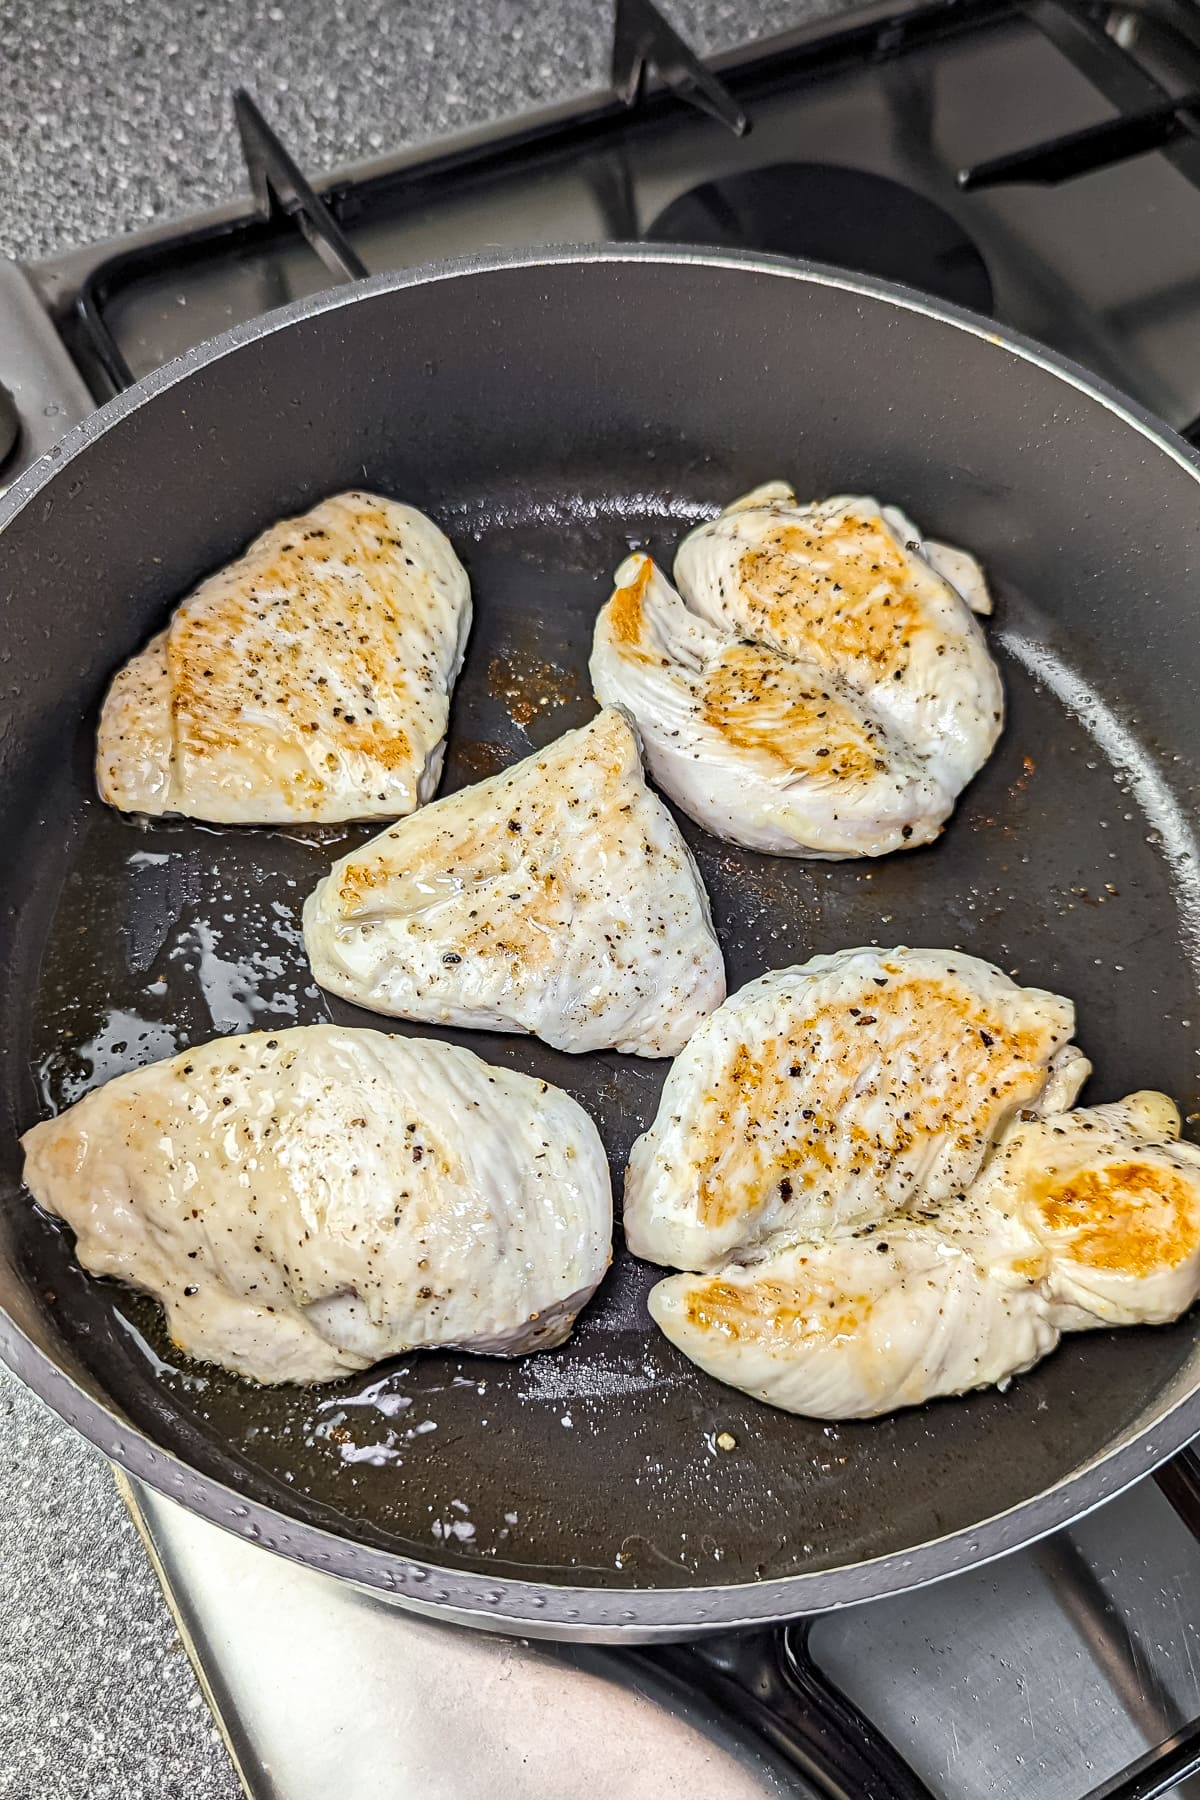 Sautéing chicken breasts in a non-stick pan over medium heat until golden brown, ready for mushroom sauce